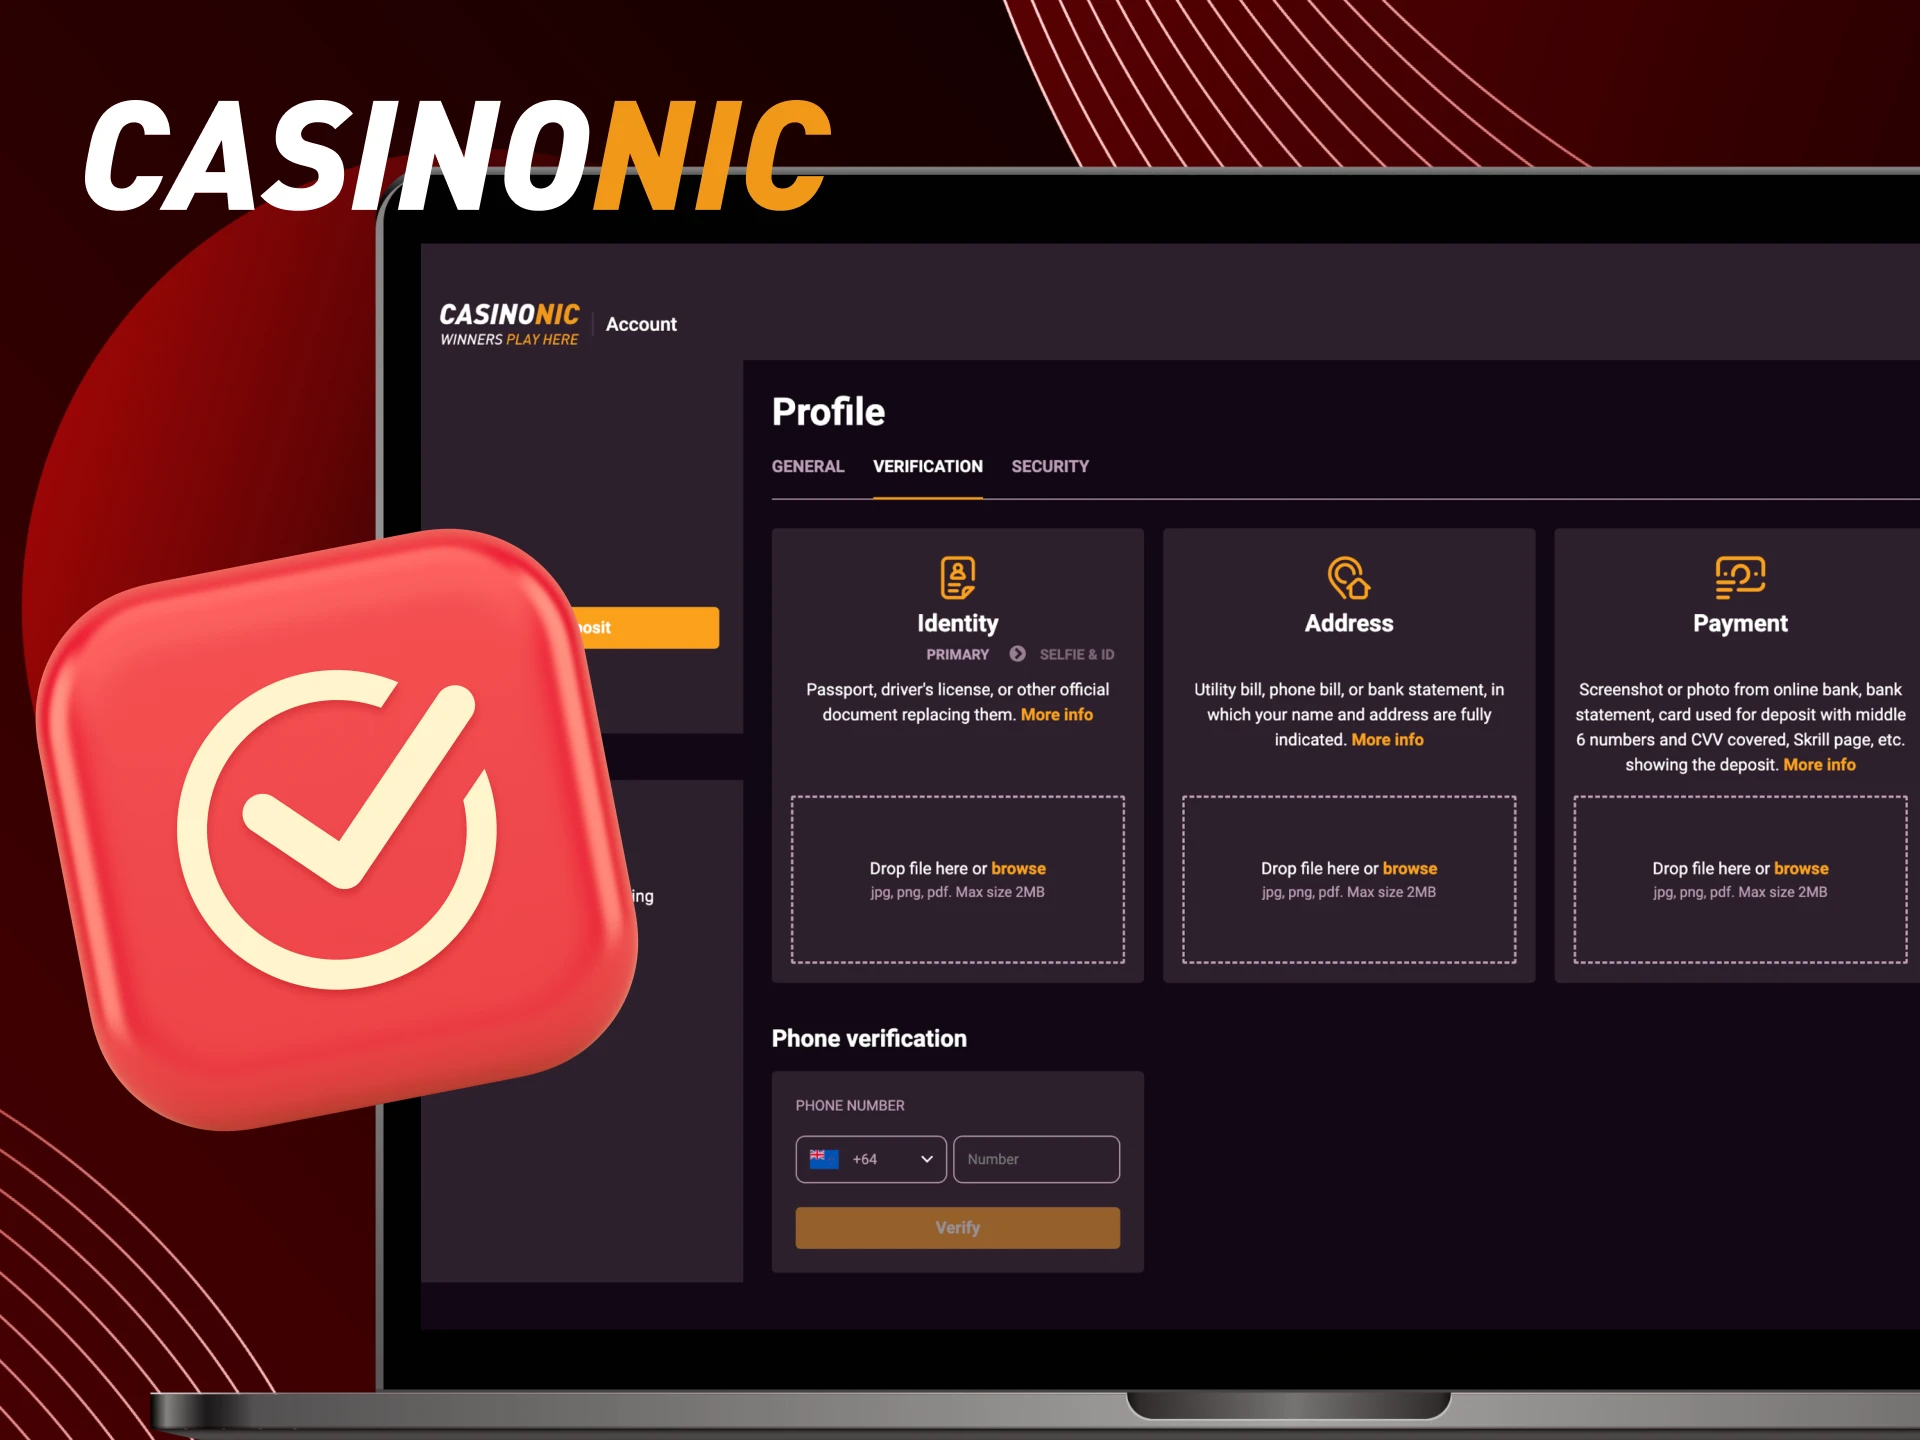 Do I need to verify my account at the online casino CasinoNic.